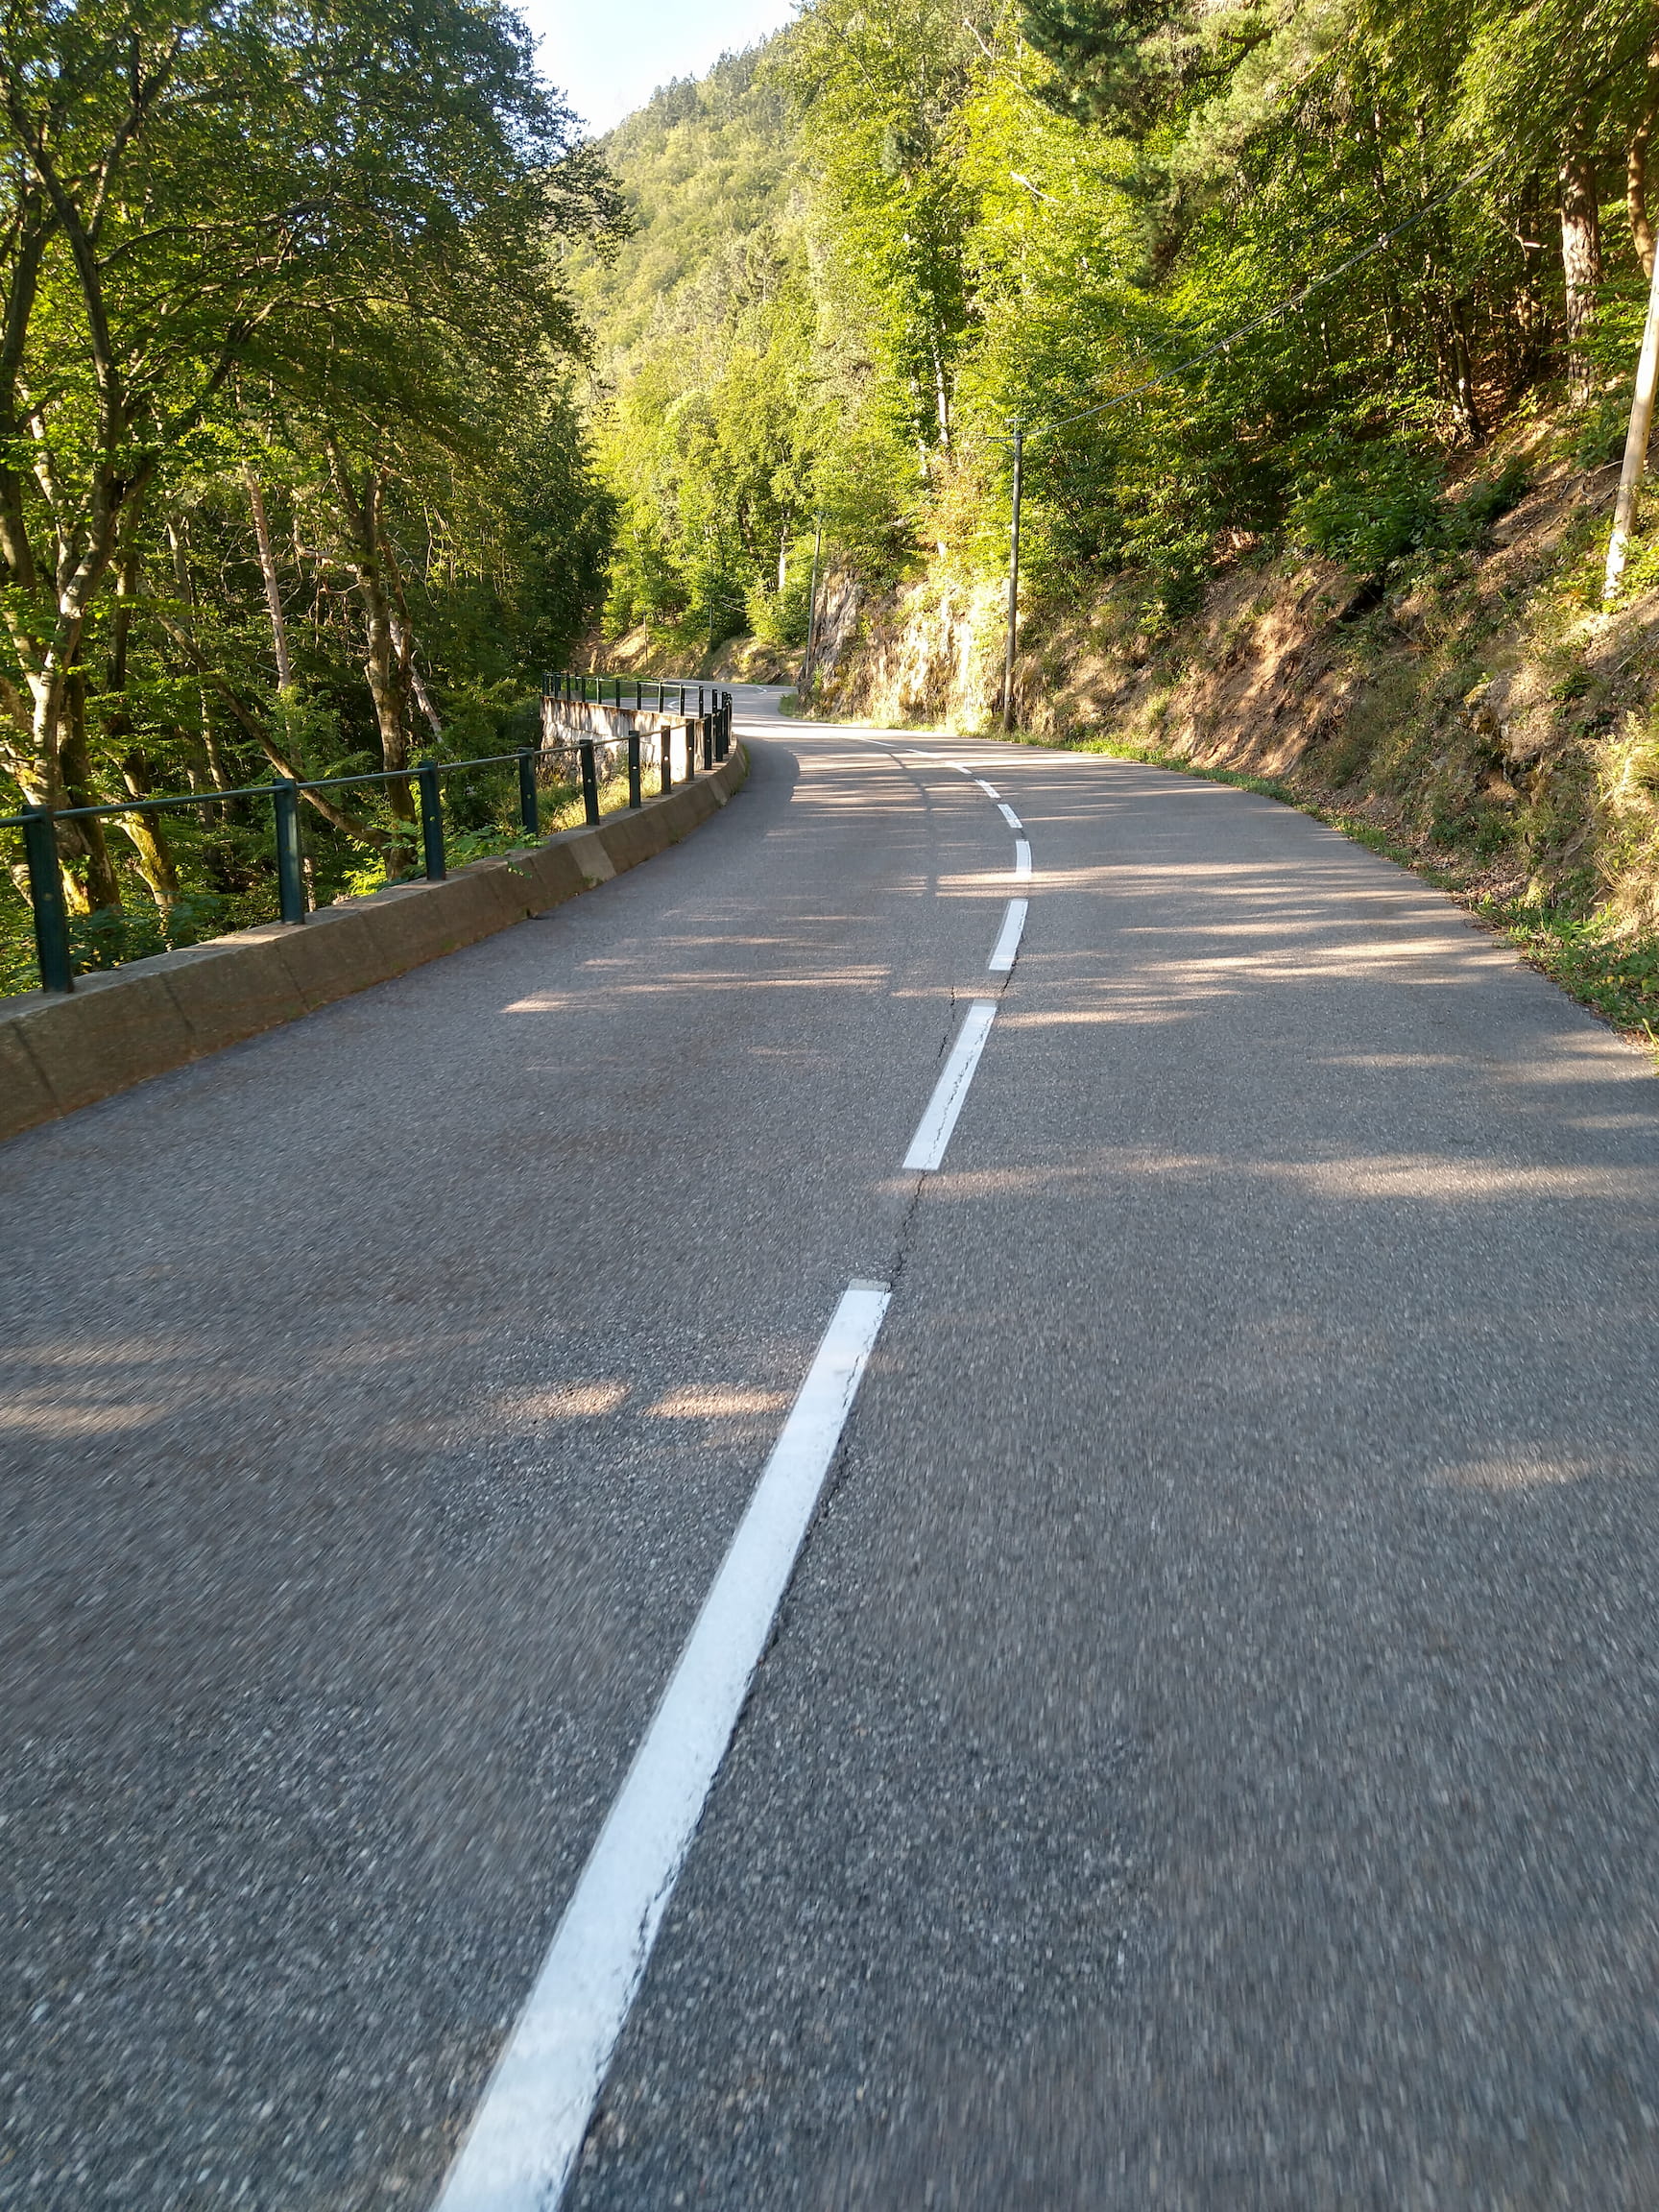 Quiet road on the way to Col de la Madeleine